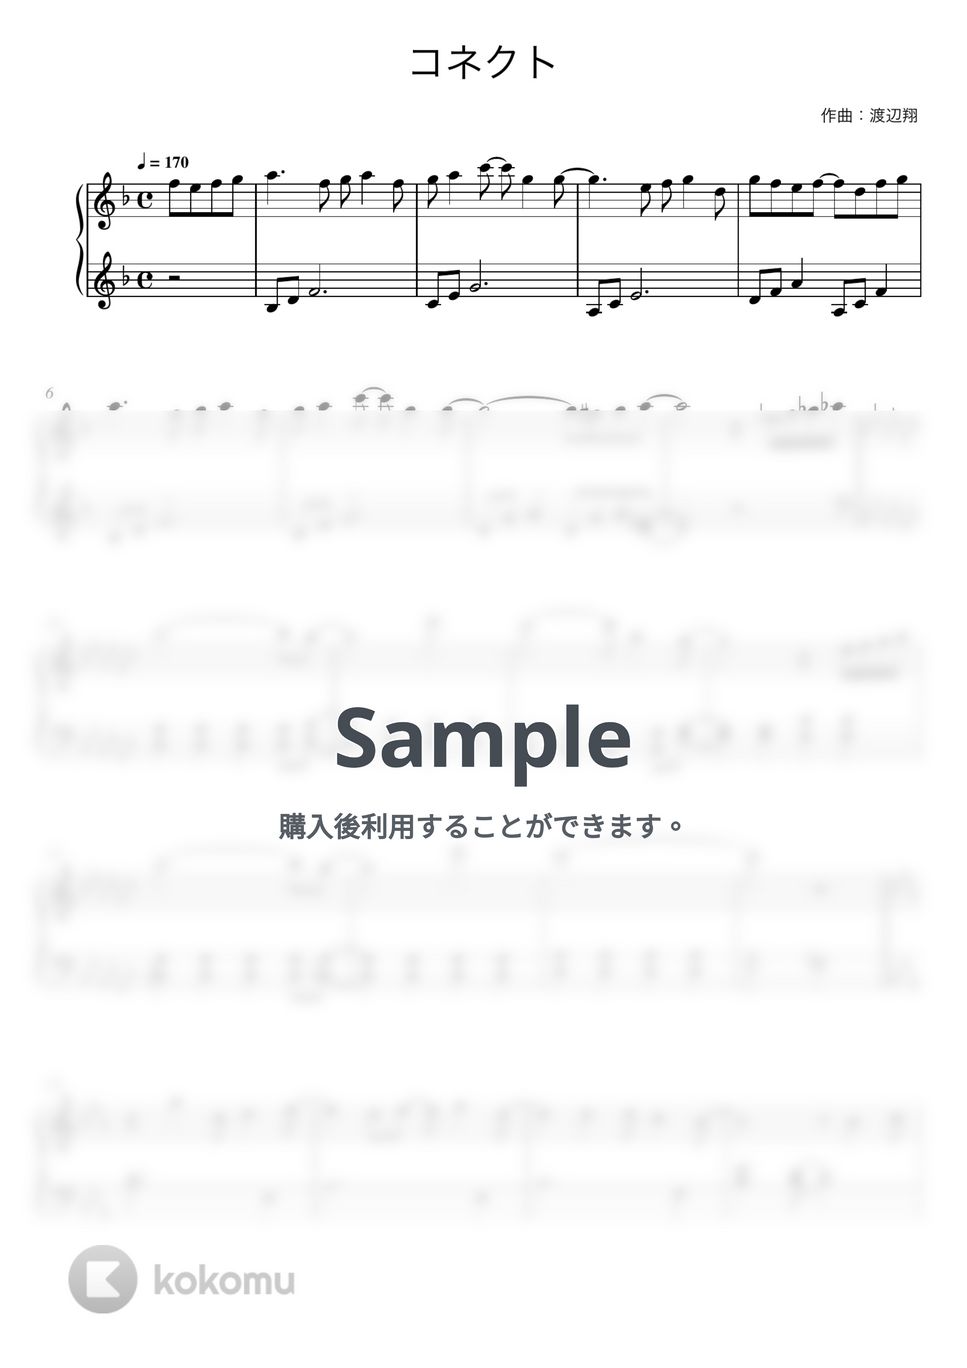 ClariS - コネクト (魔法少女まどか☆マギカ / ピアノ初心者向け) by Piano Lovers. jp